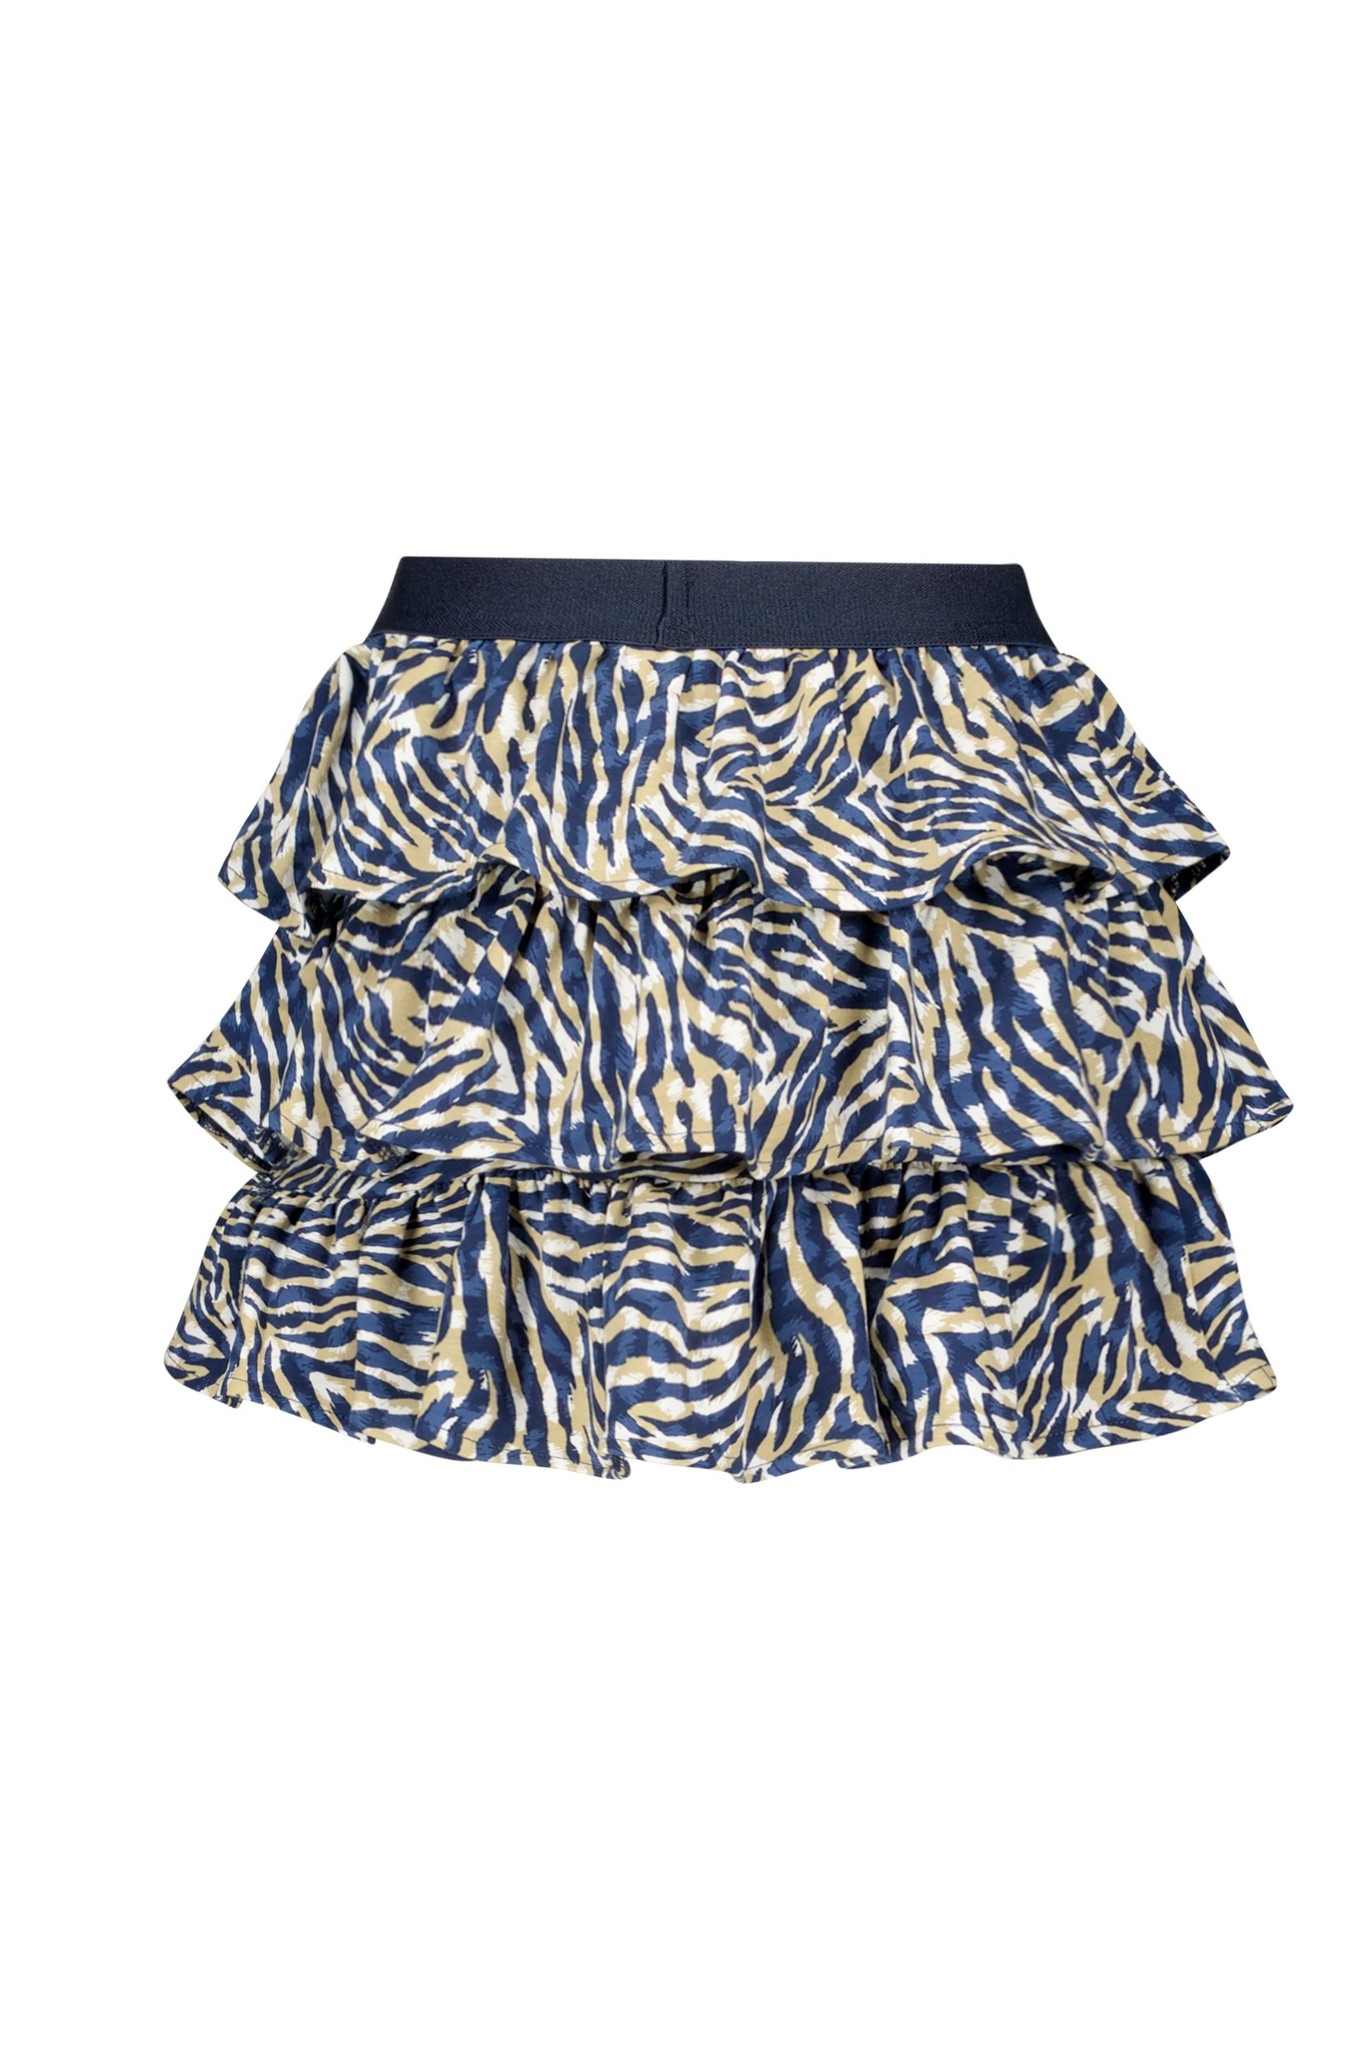 Layered Skirt - Zebra Print